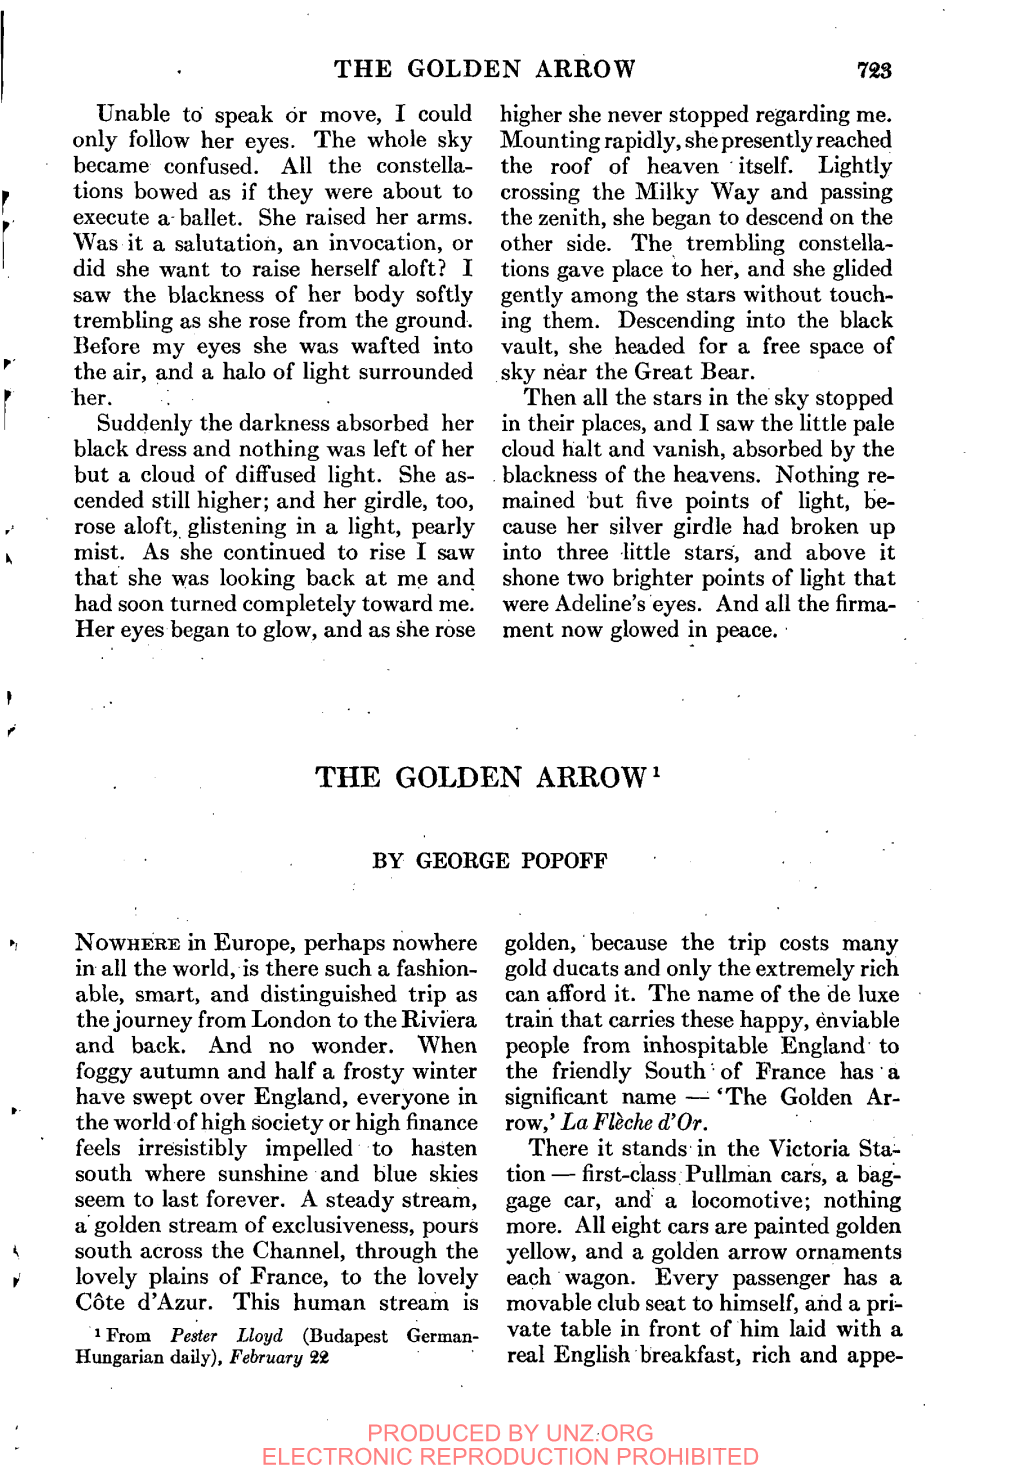 The Golden Arrow1